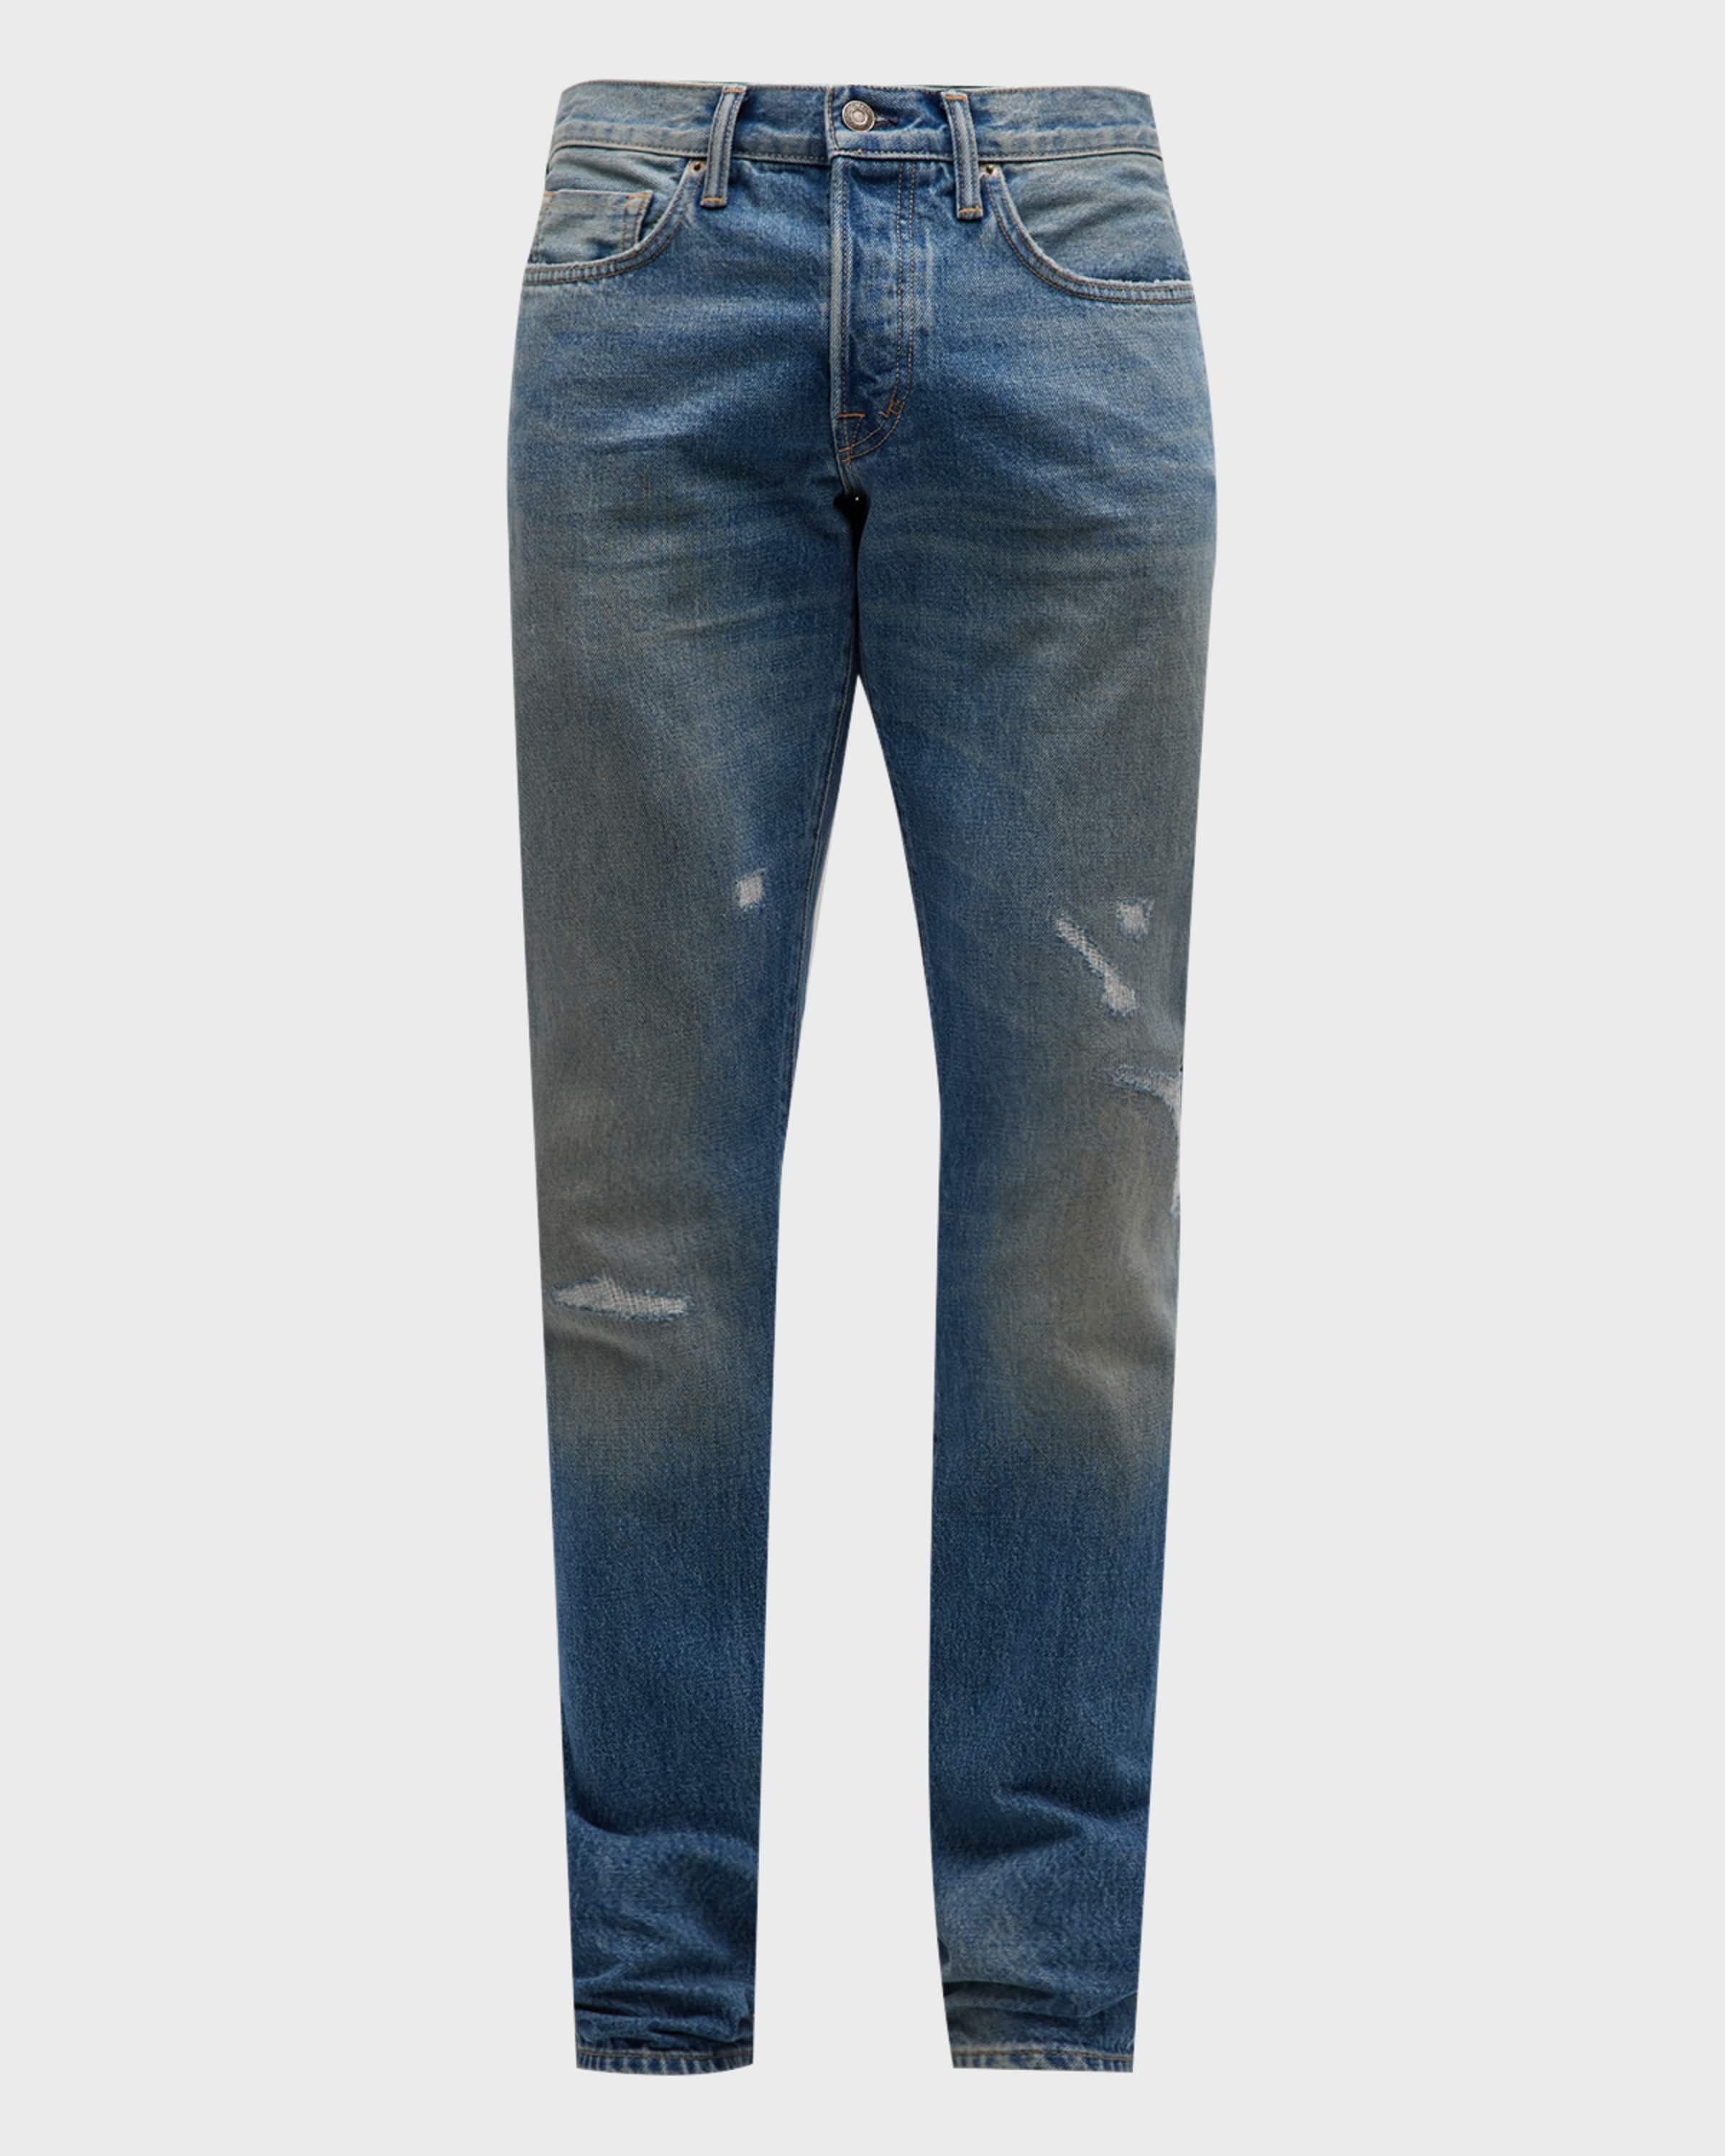 Men's Slim Fit Distressed Jeans - 1